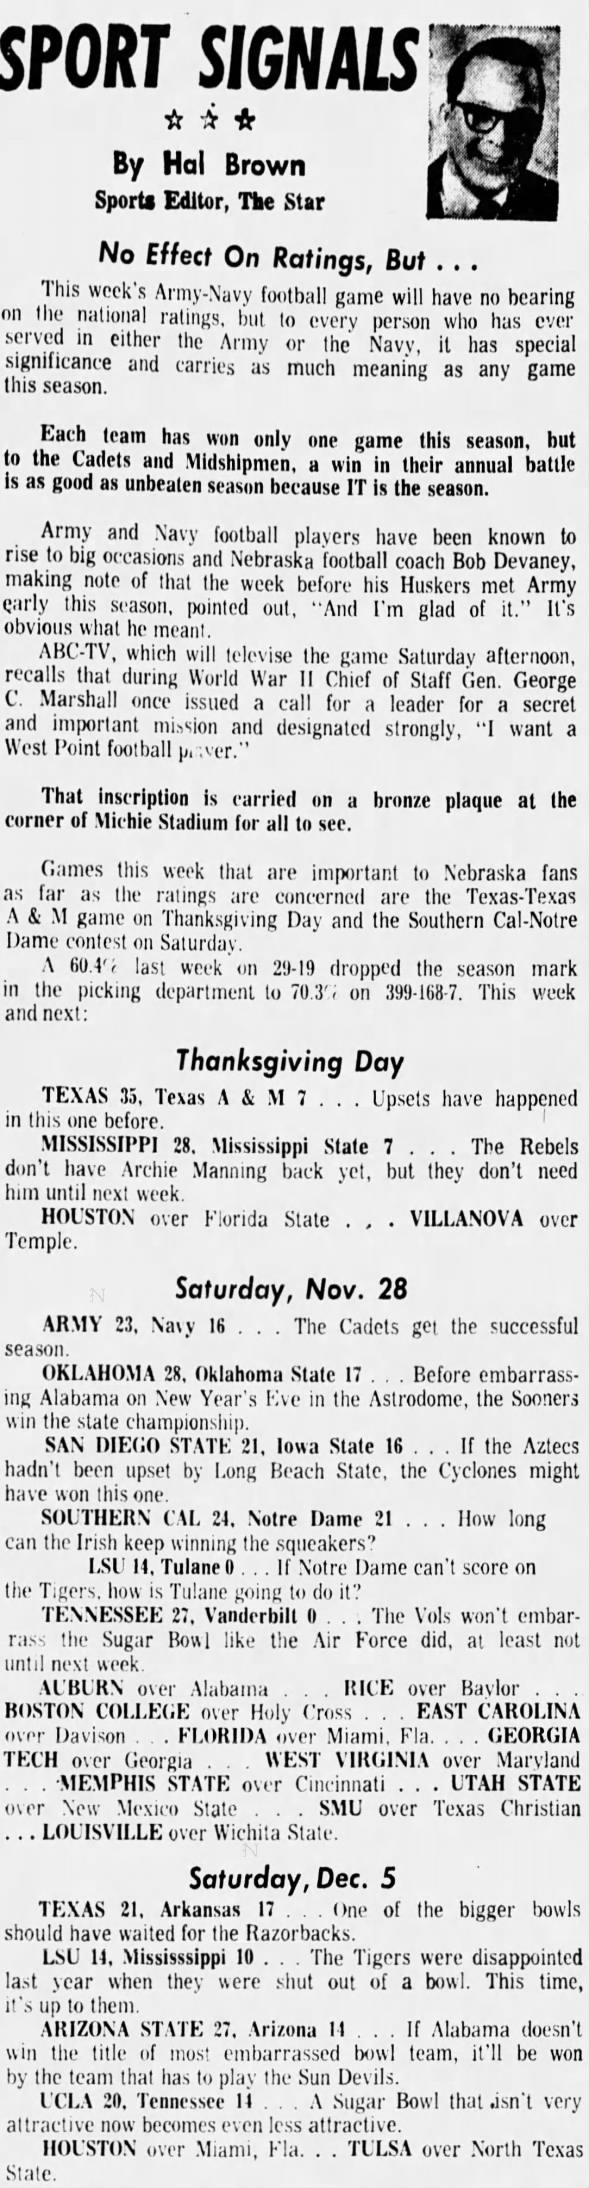 1970.11 Hal Brown Thanksgiving week predictions